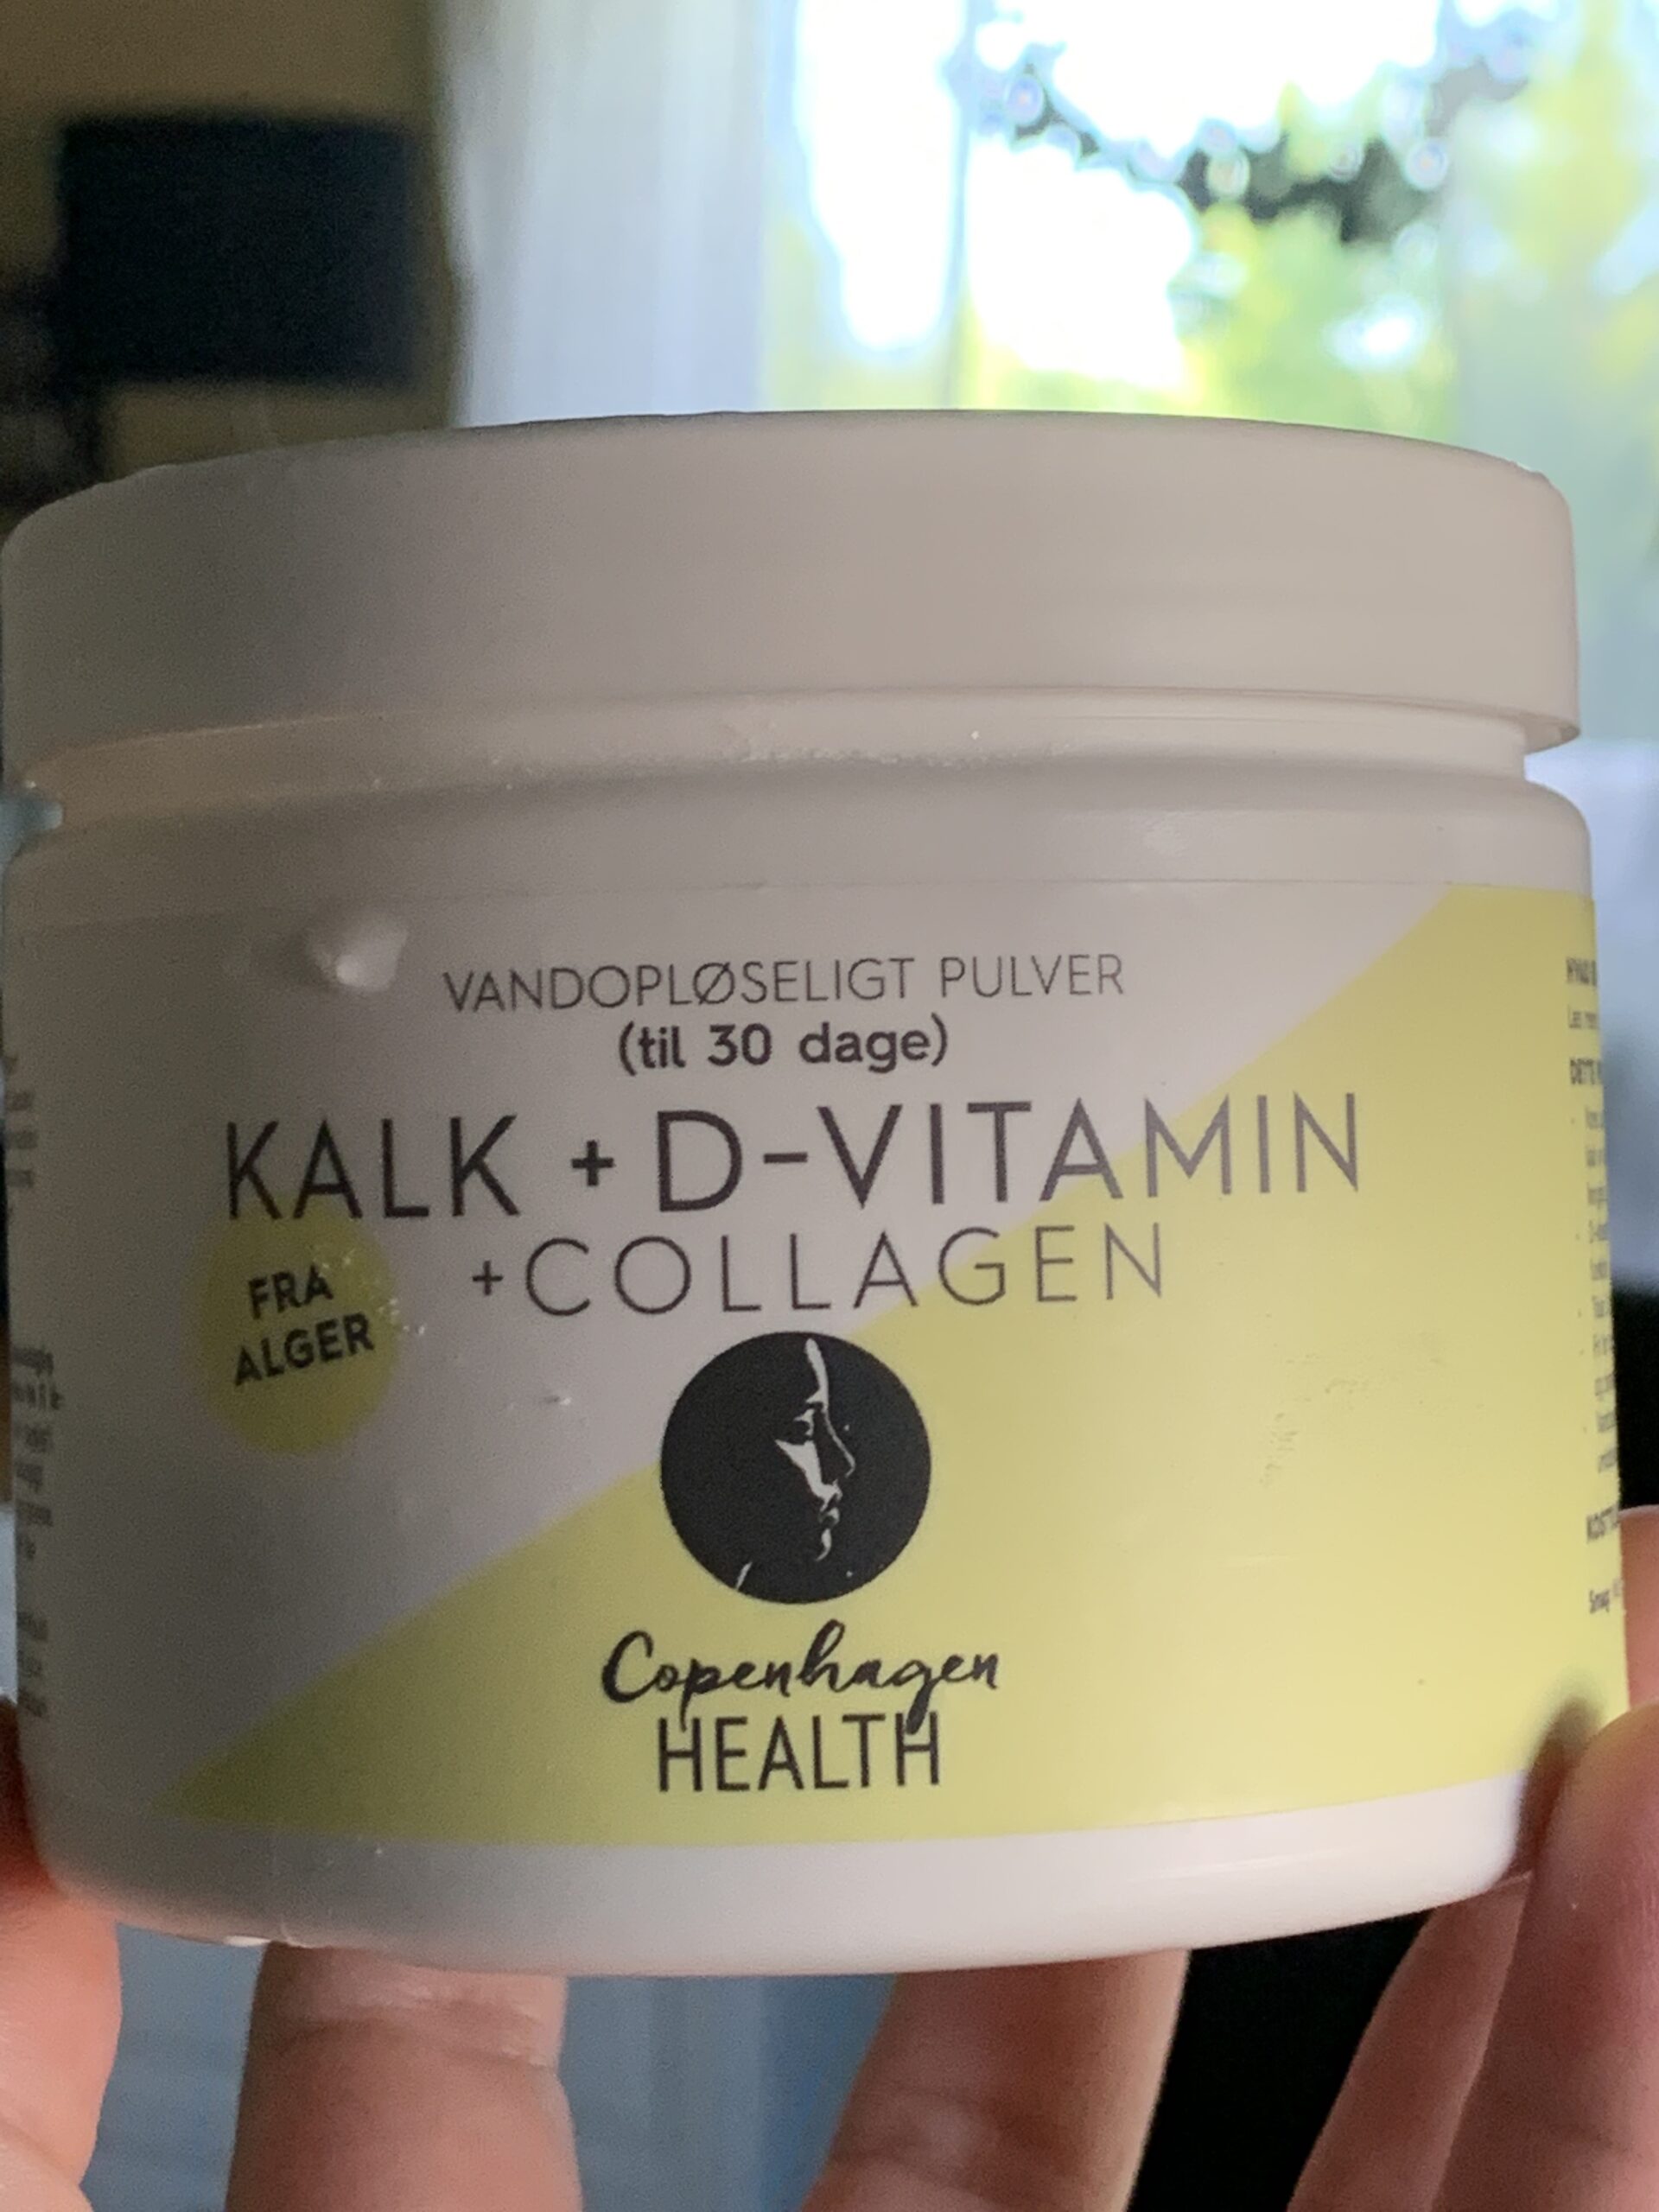 Copenhagen health kalk +d-vitamin +collagen